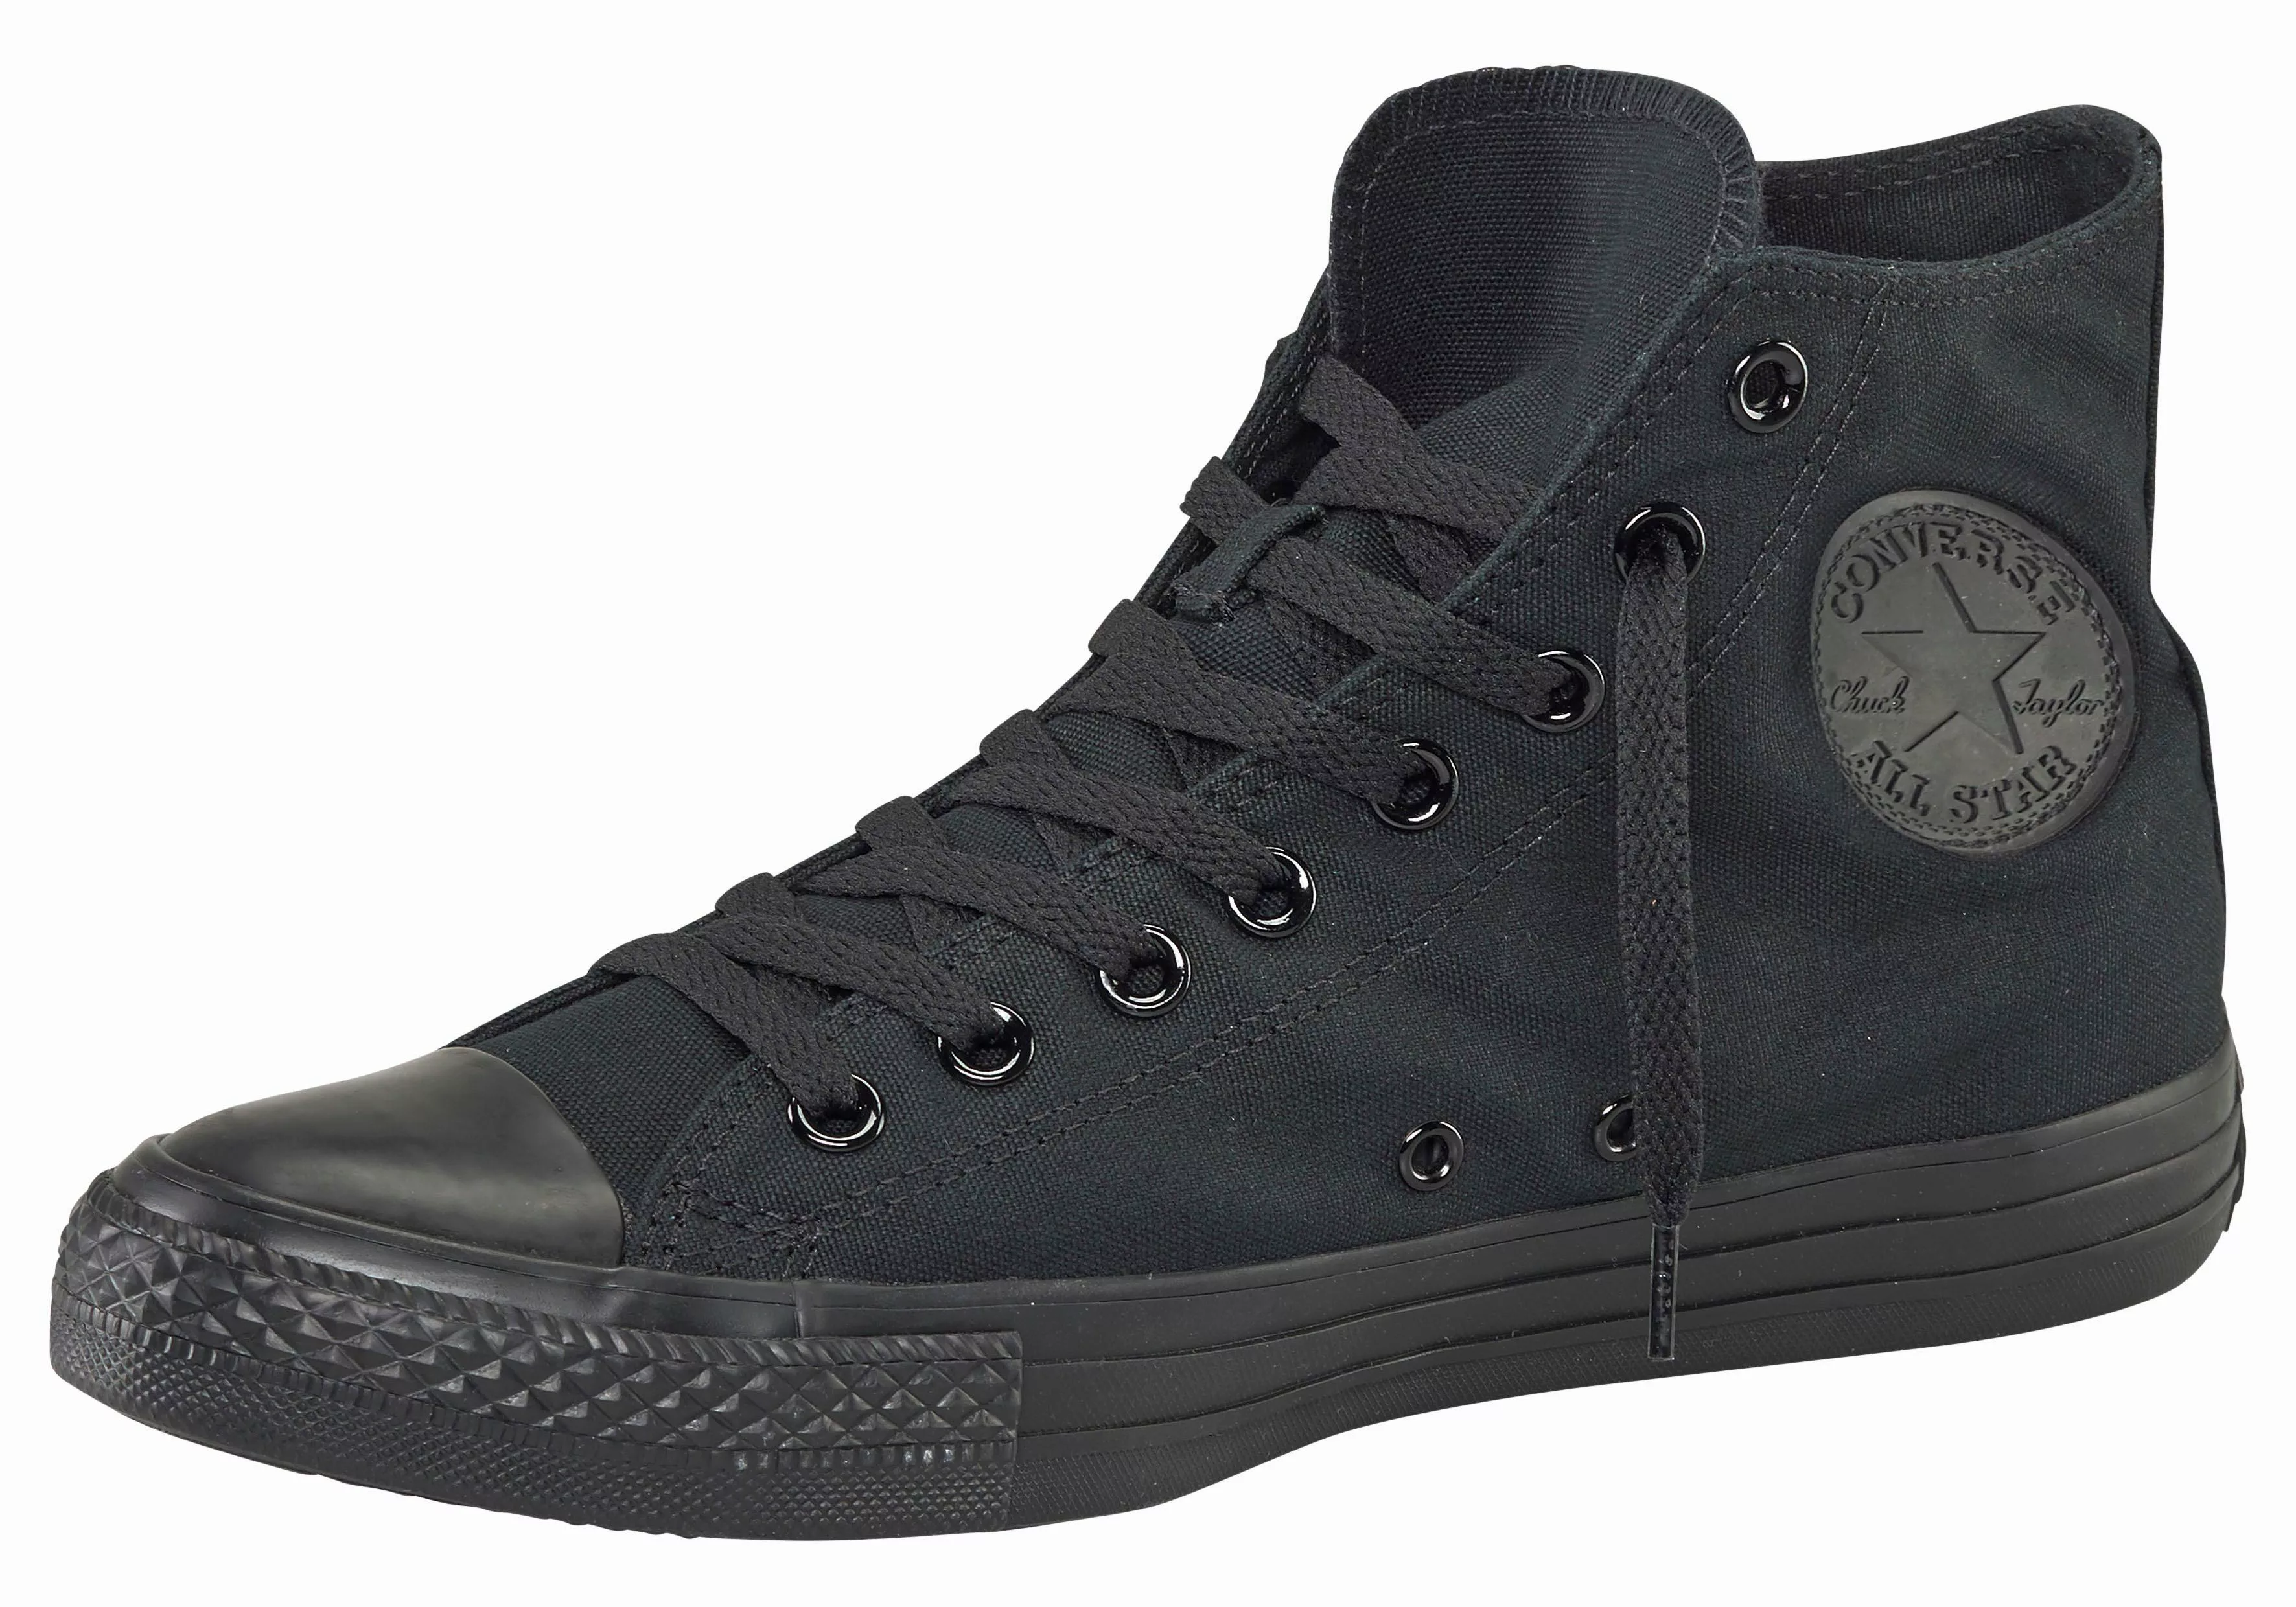 Converse Chuck Taylor All Star Hi All Black Schuhe EU 36 1/2 Black günstig online kaufen